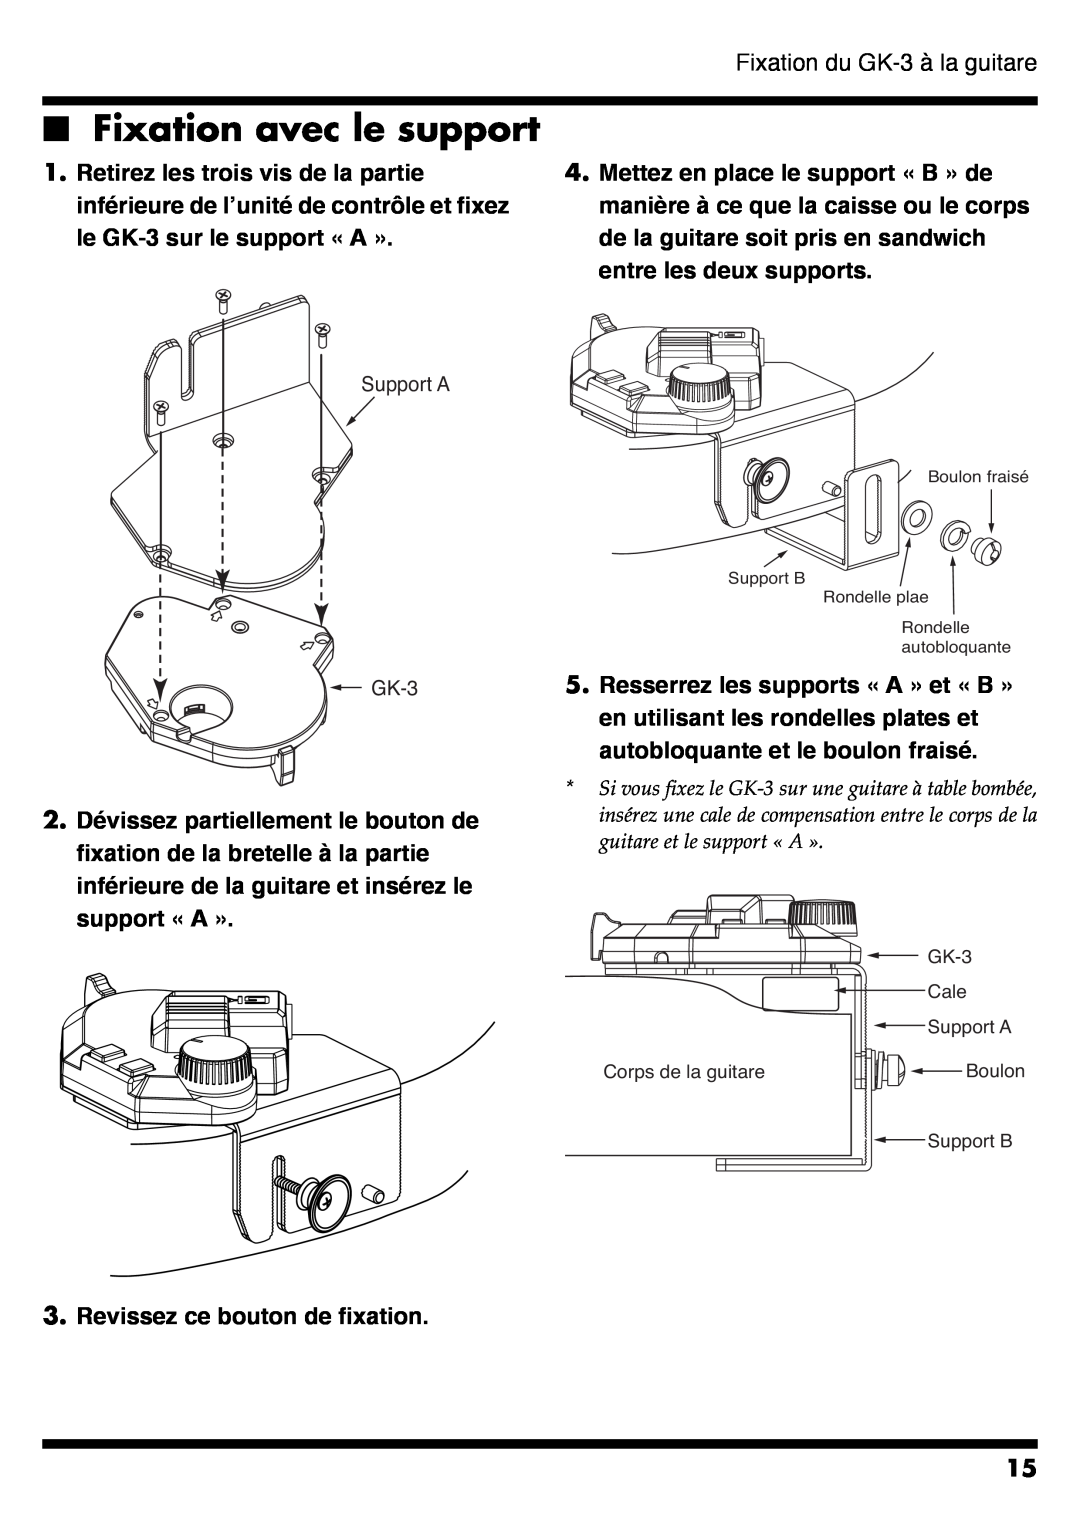 Roland GR-20 manual Fixation avec le support 